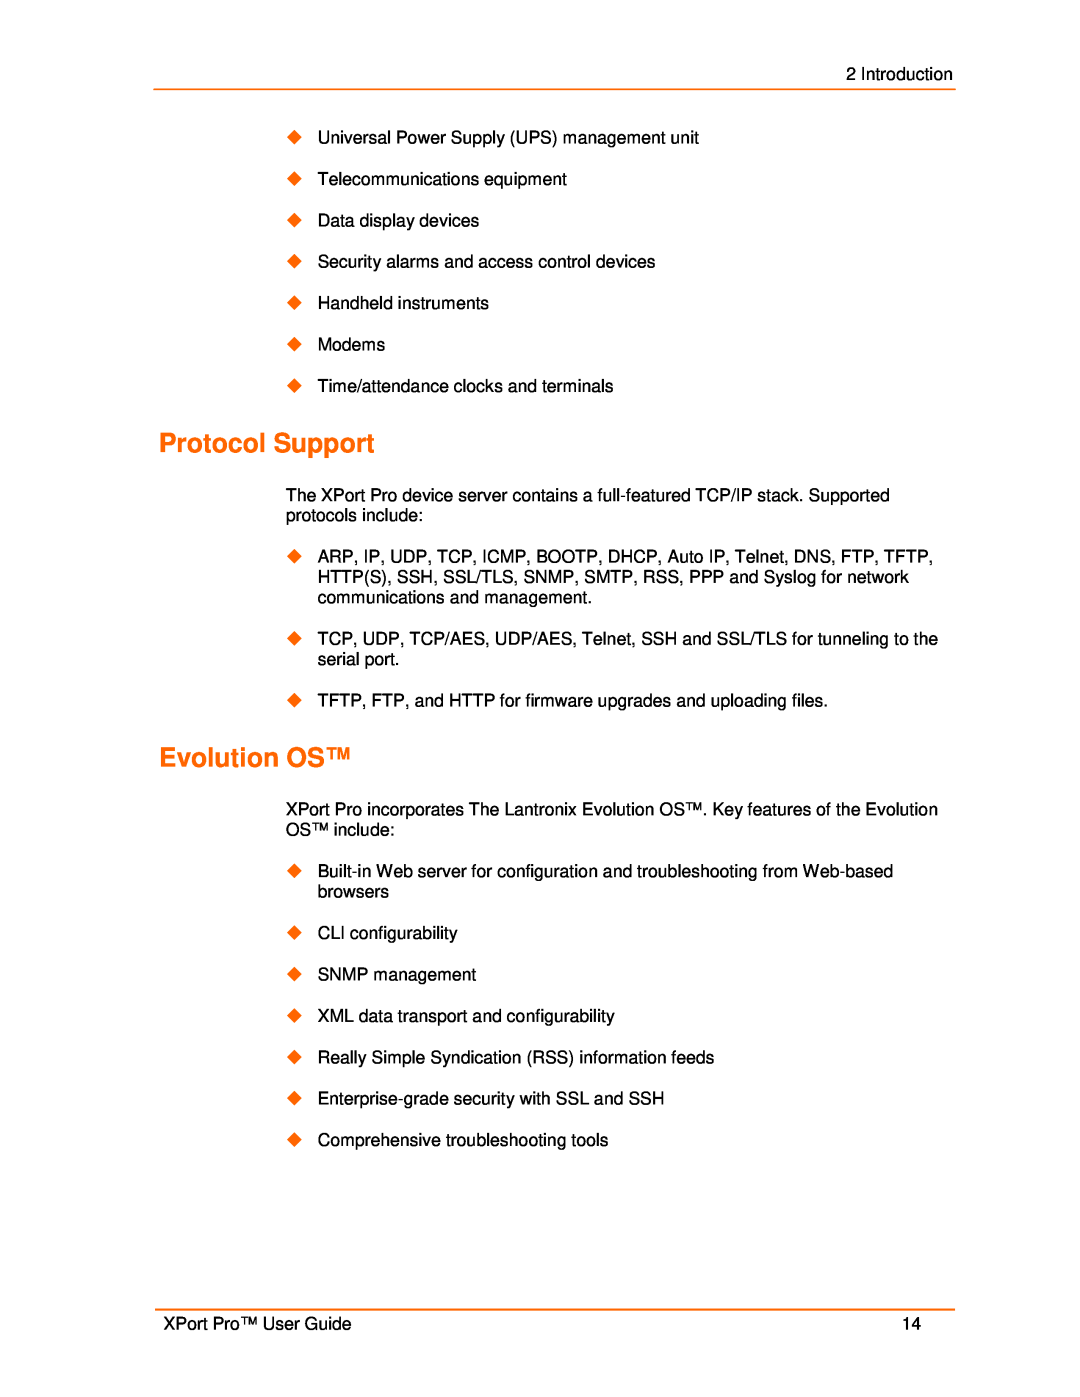 Lantronix 900-560 manual Protocol Support, Evolution OS 